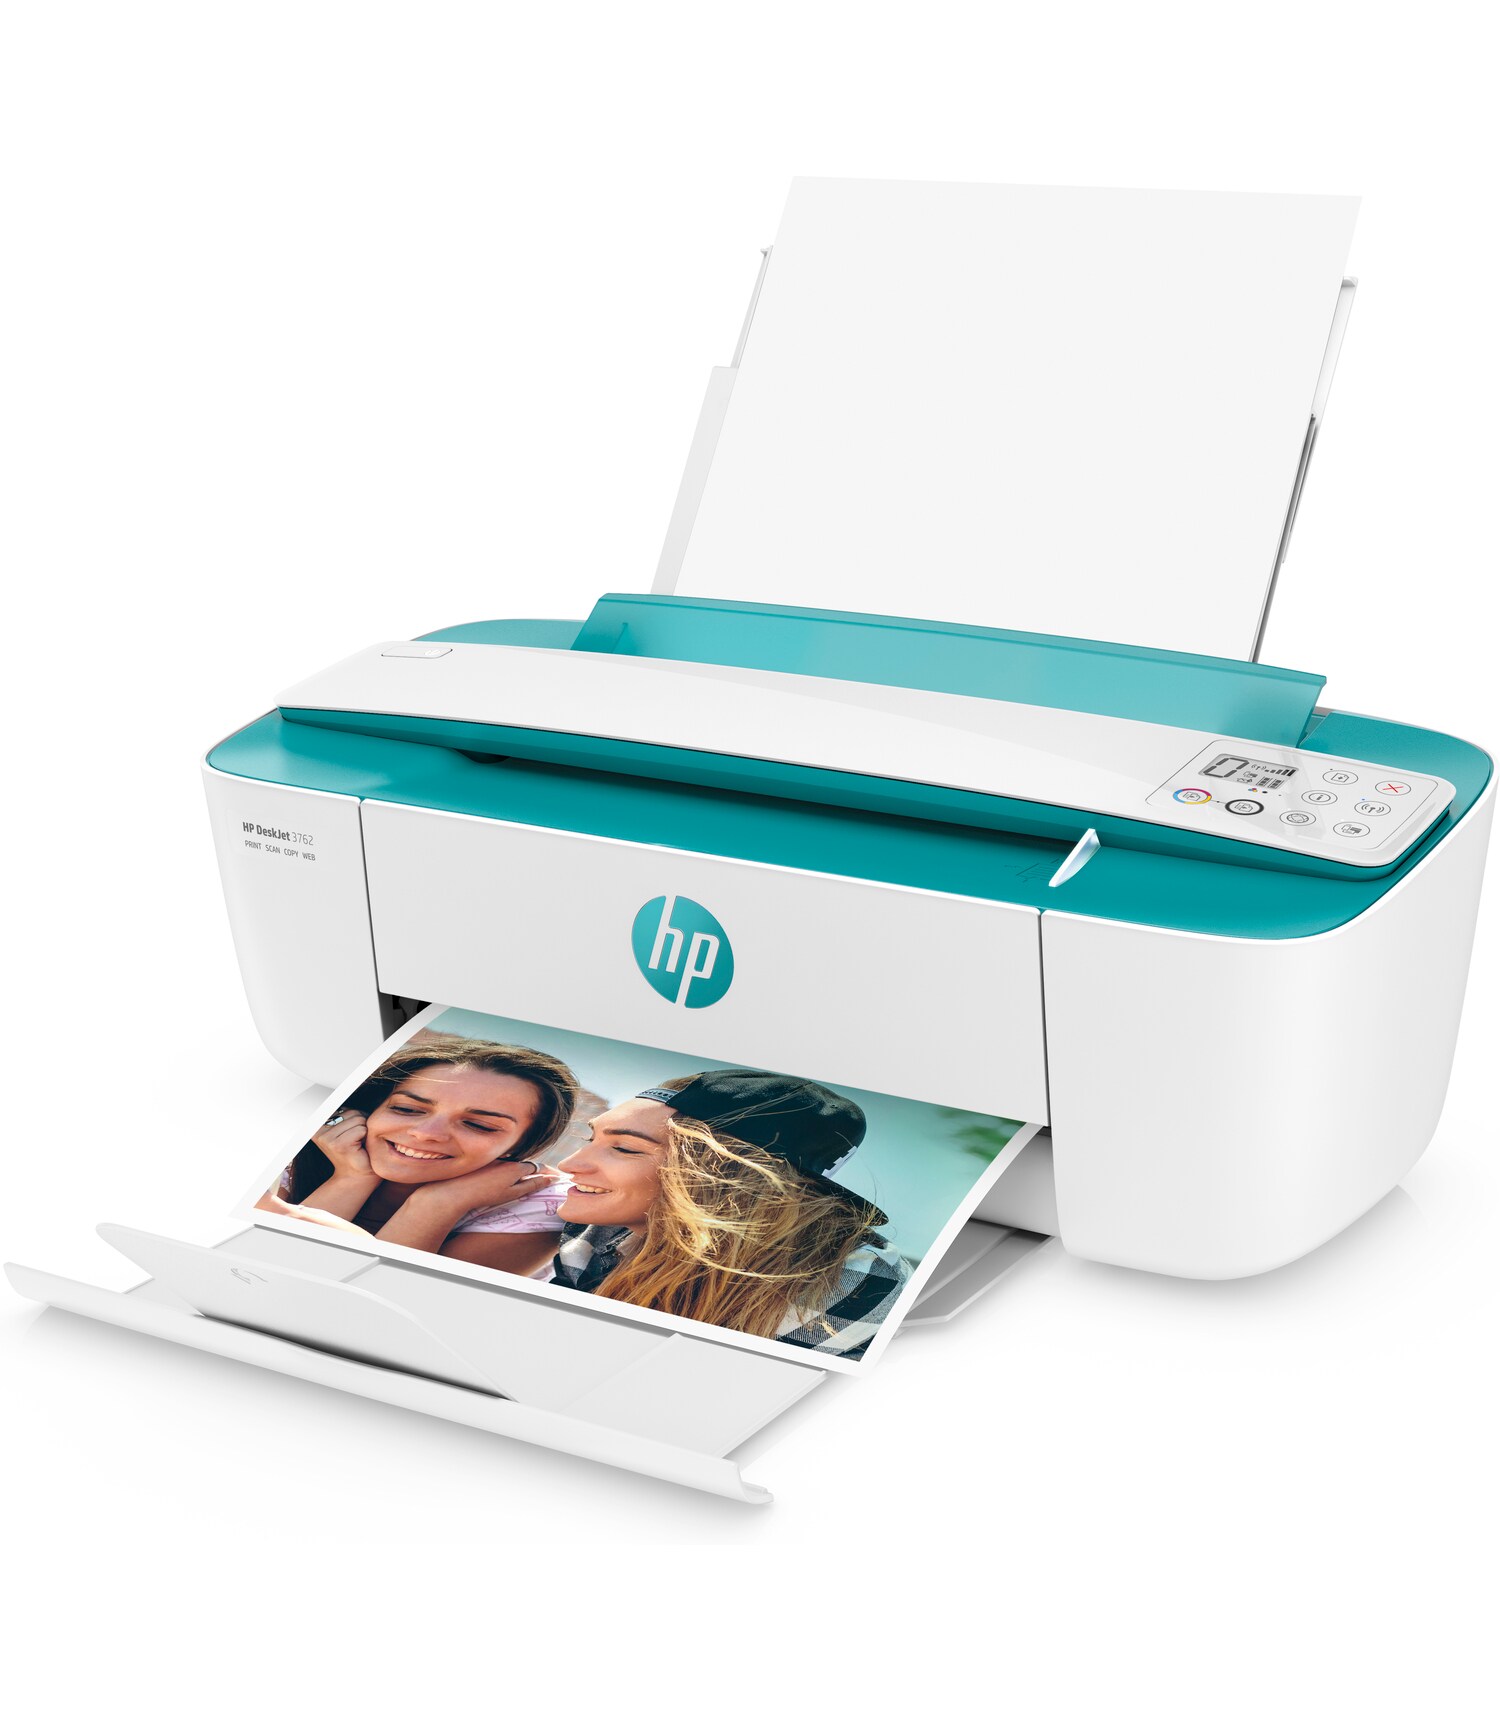 Obrázek HP DeskJet 3762 All In One Printer - HP Instant Ink ready